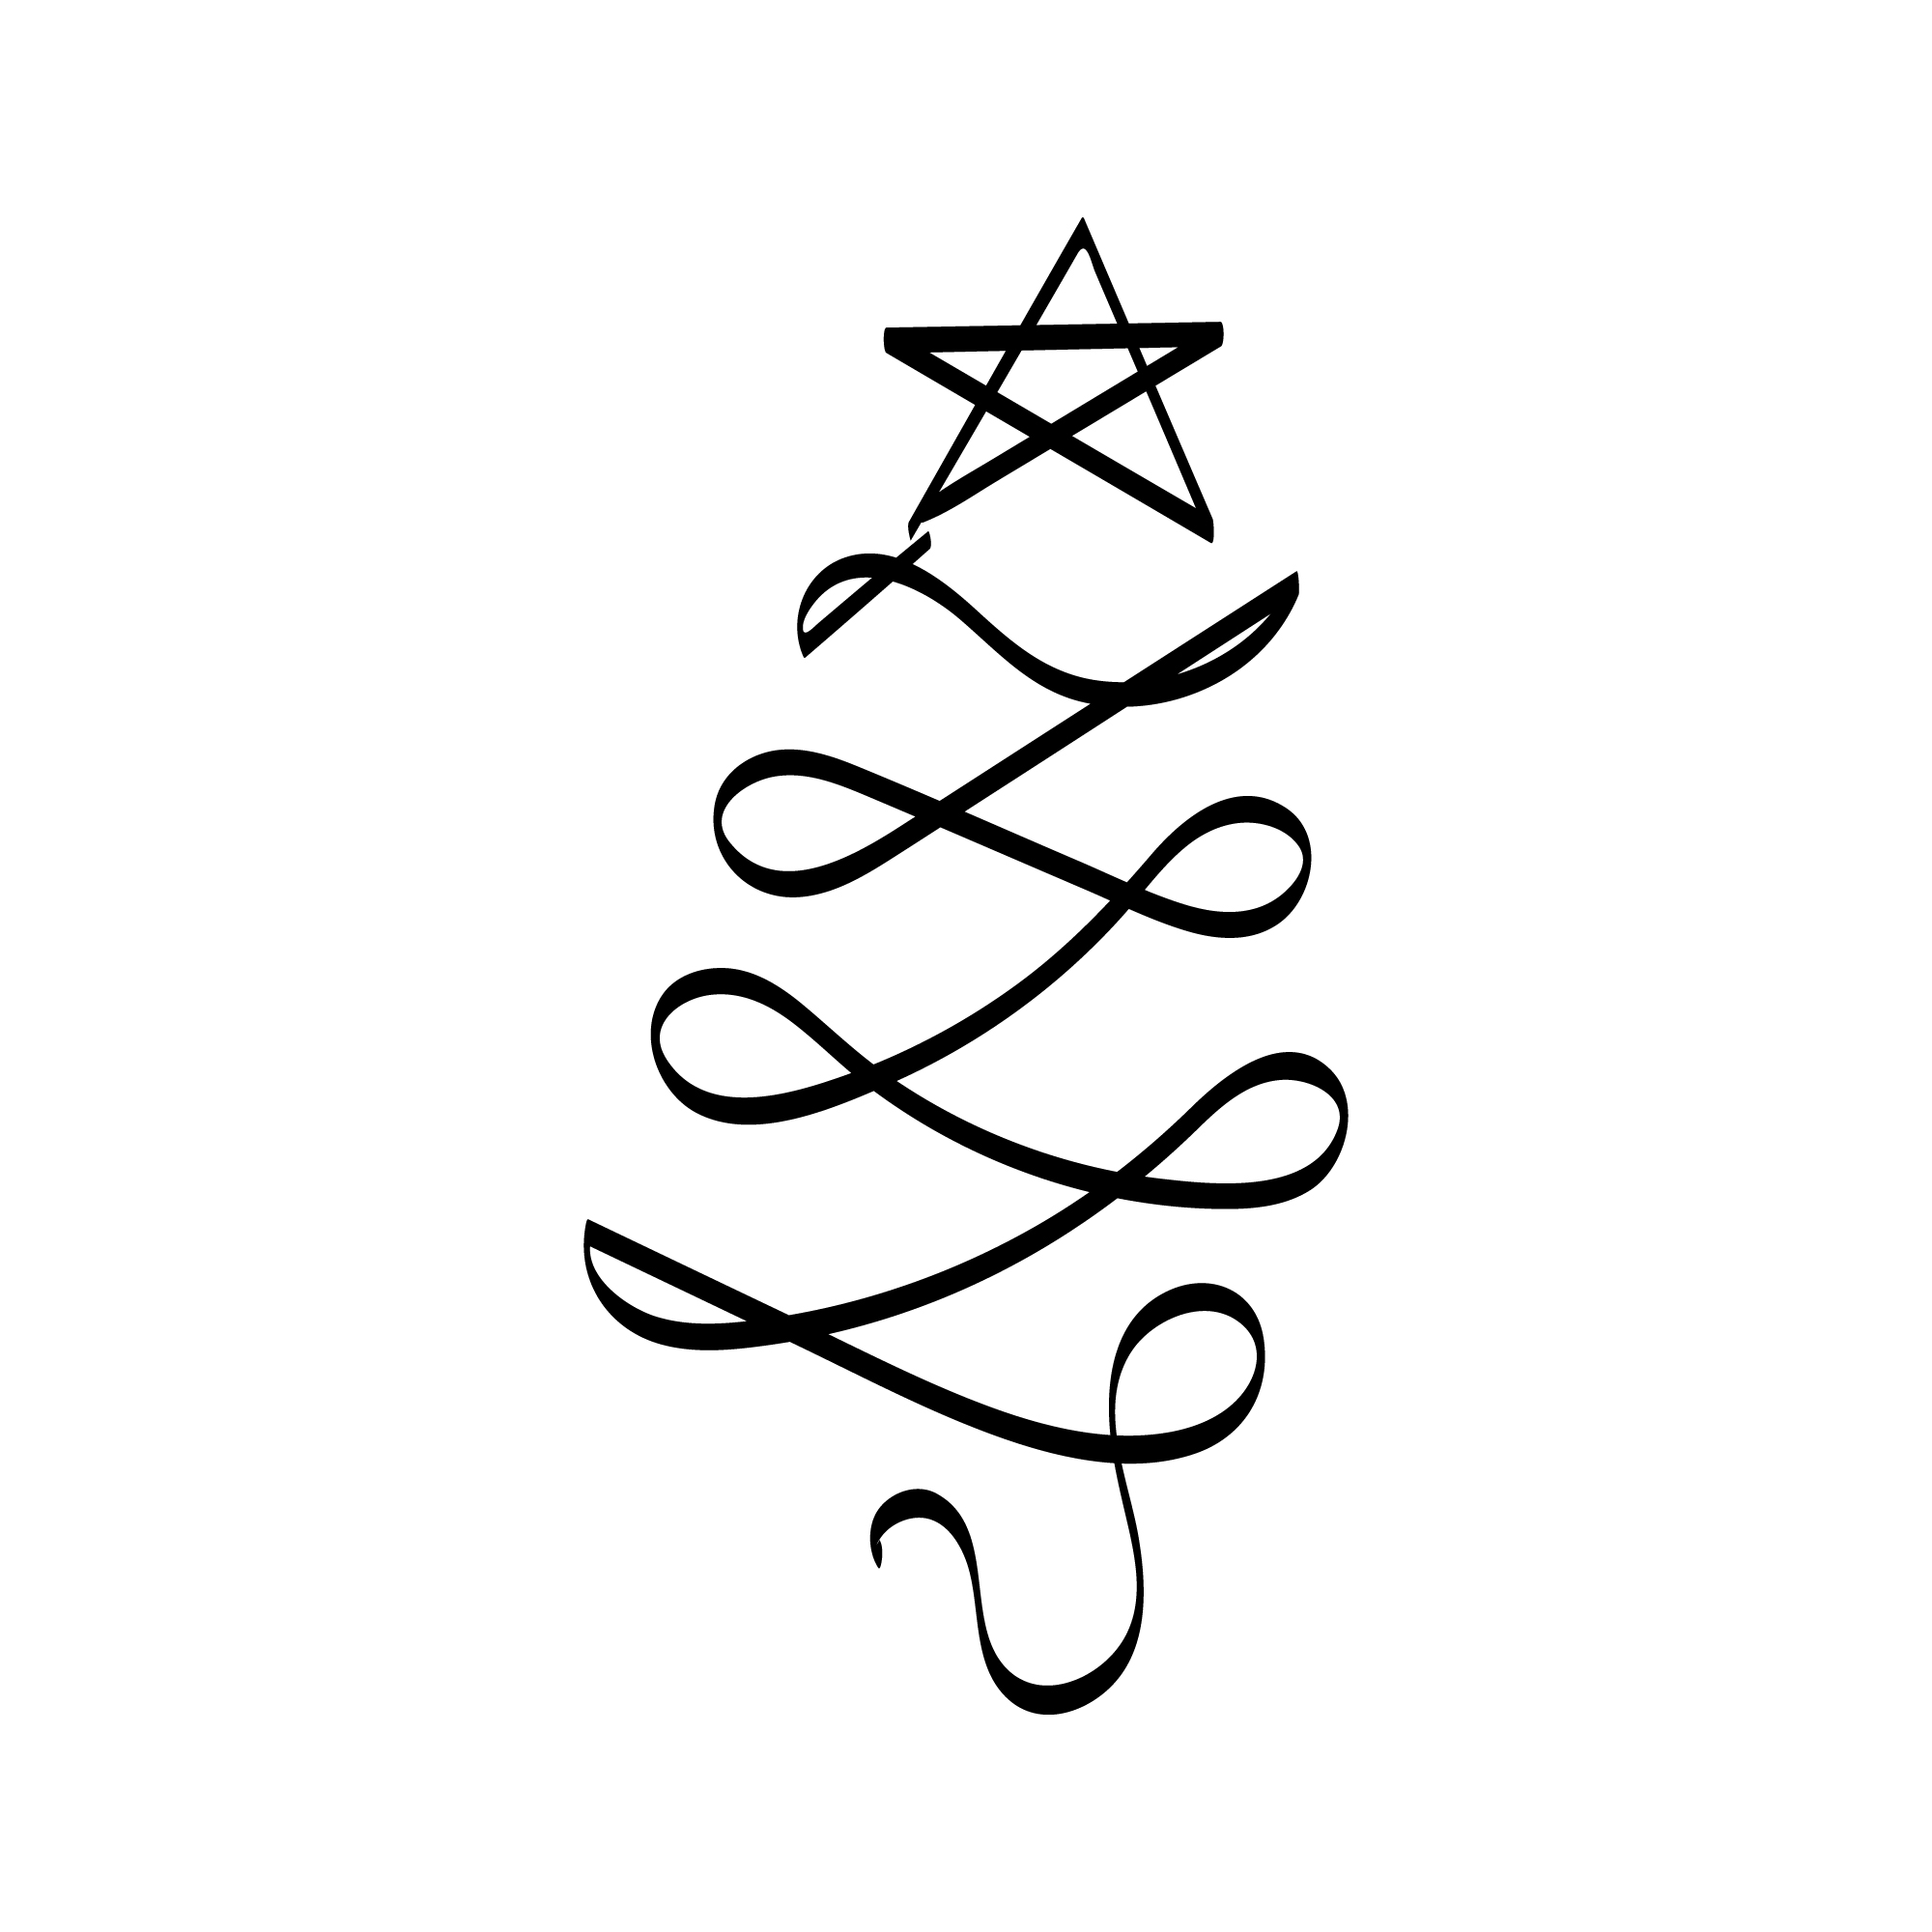 Christmas tree in line art.